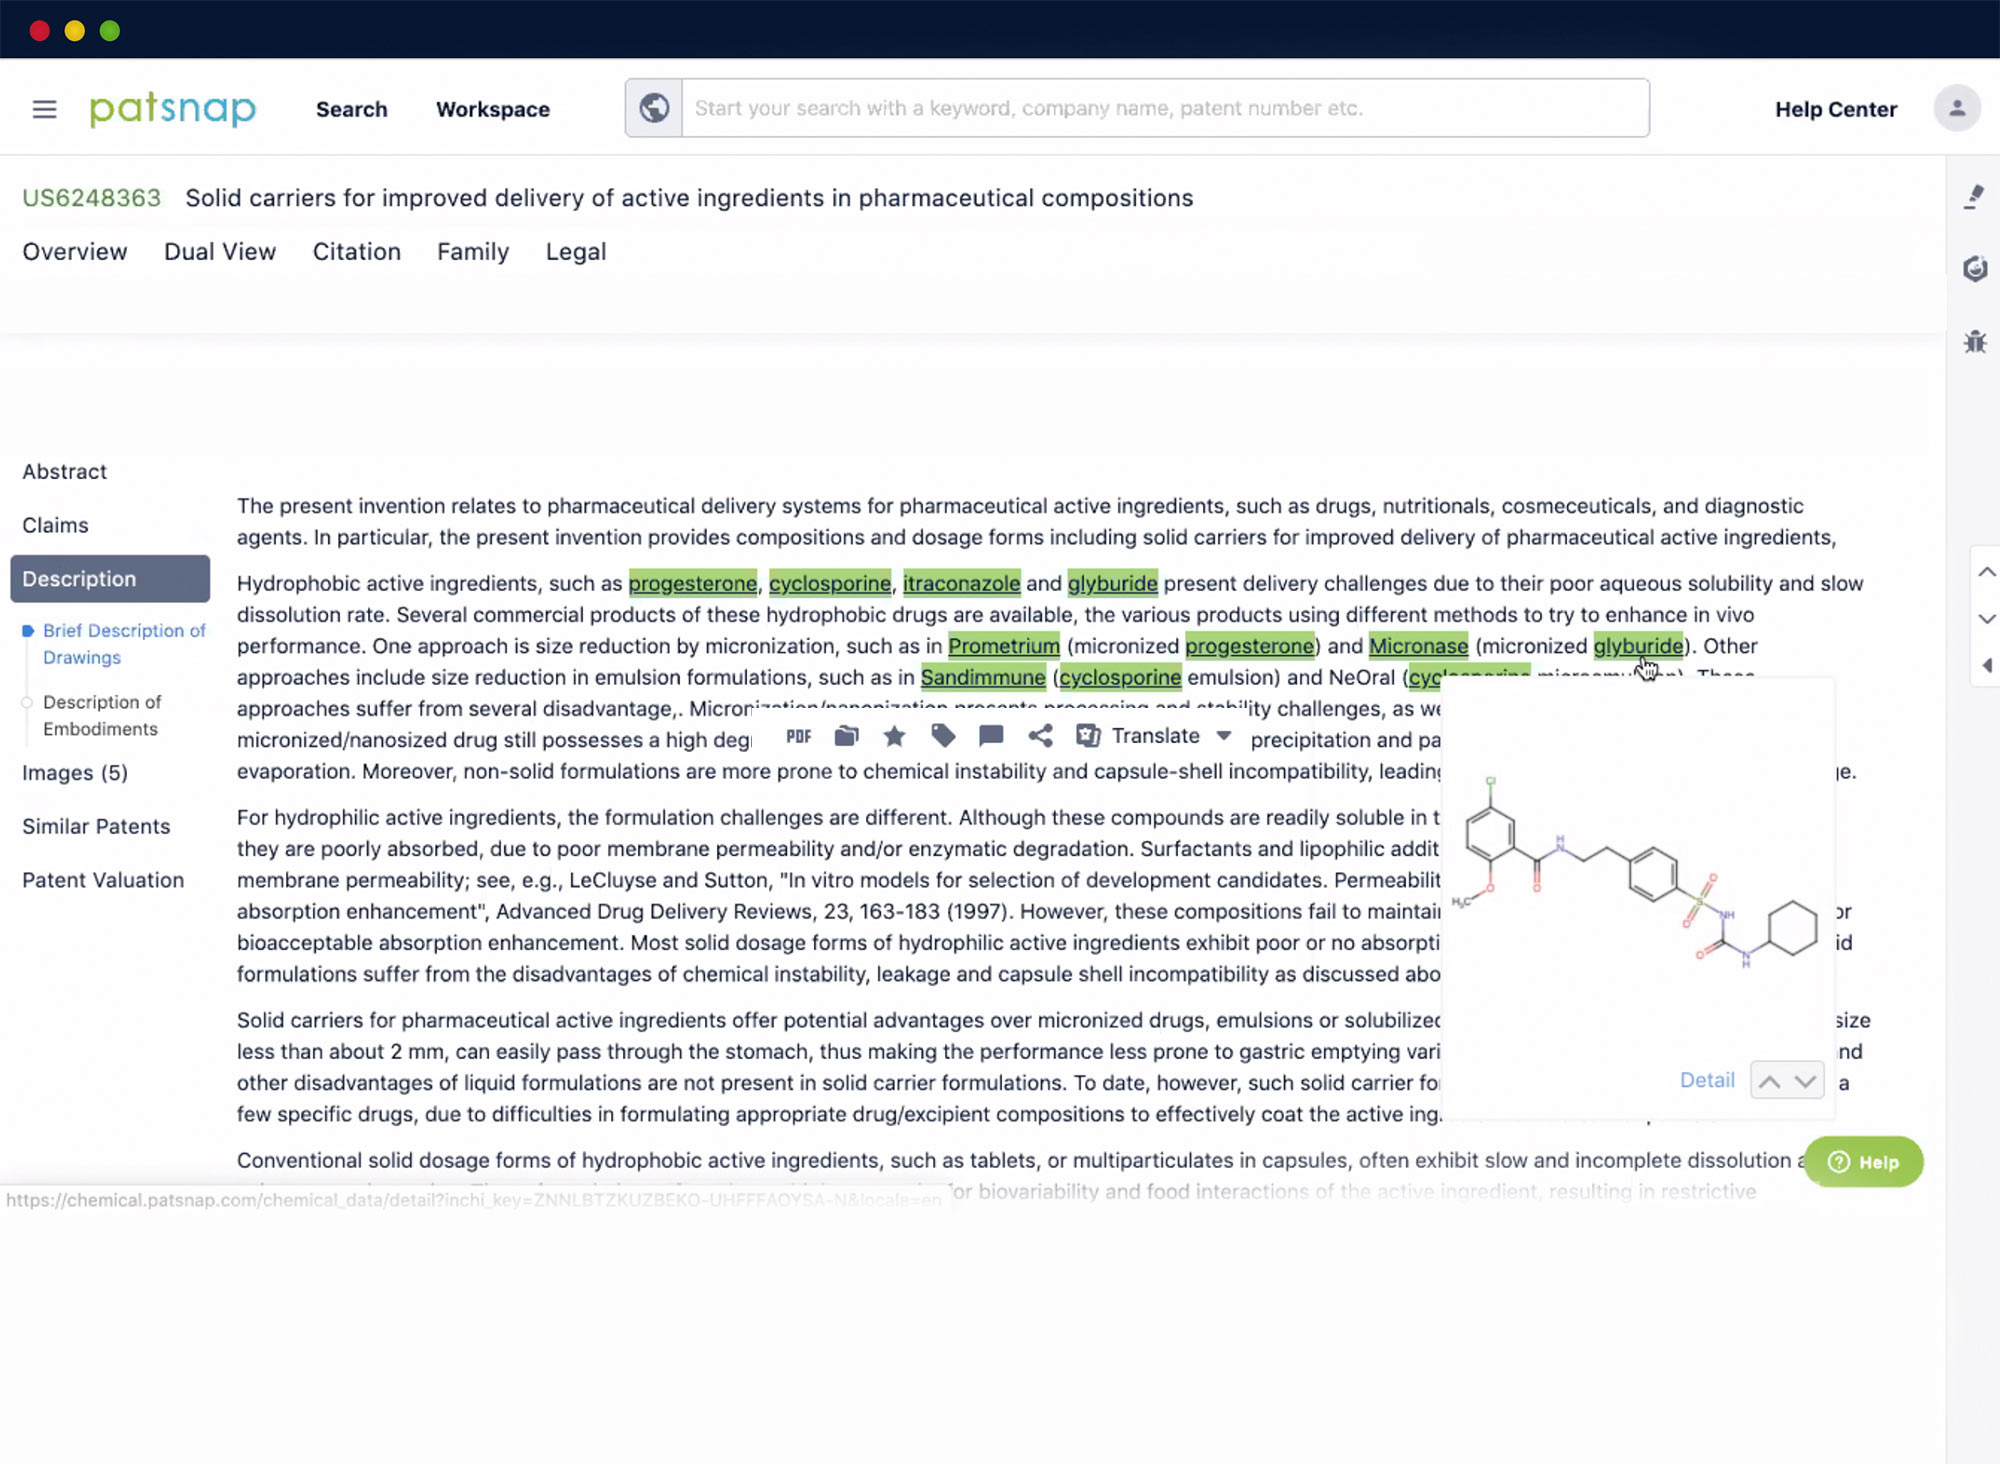 Chemical platform screen grab of a patent description